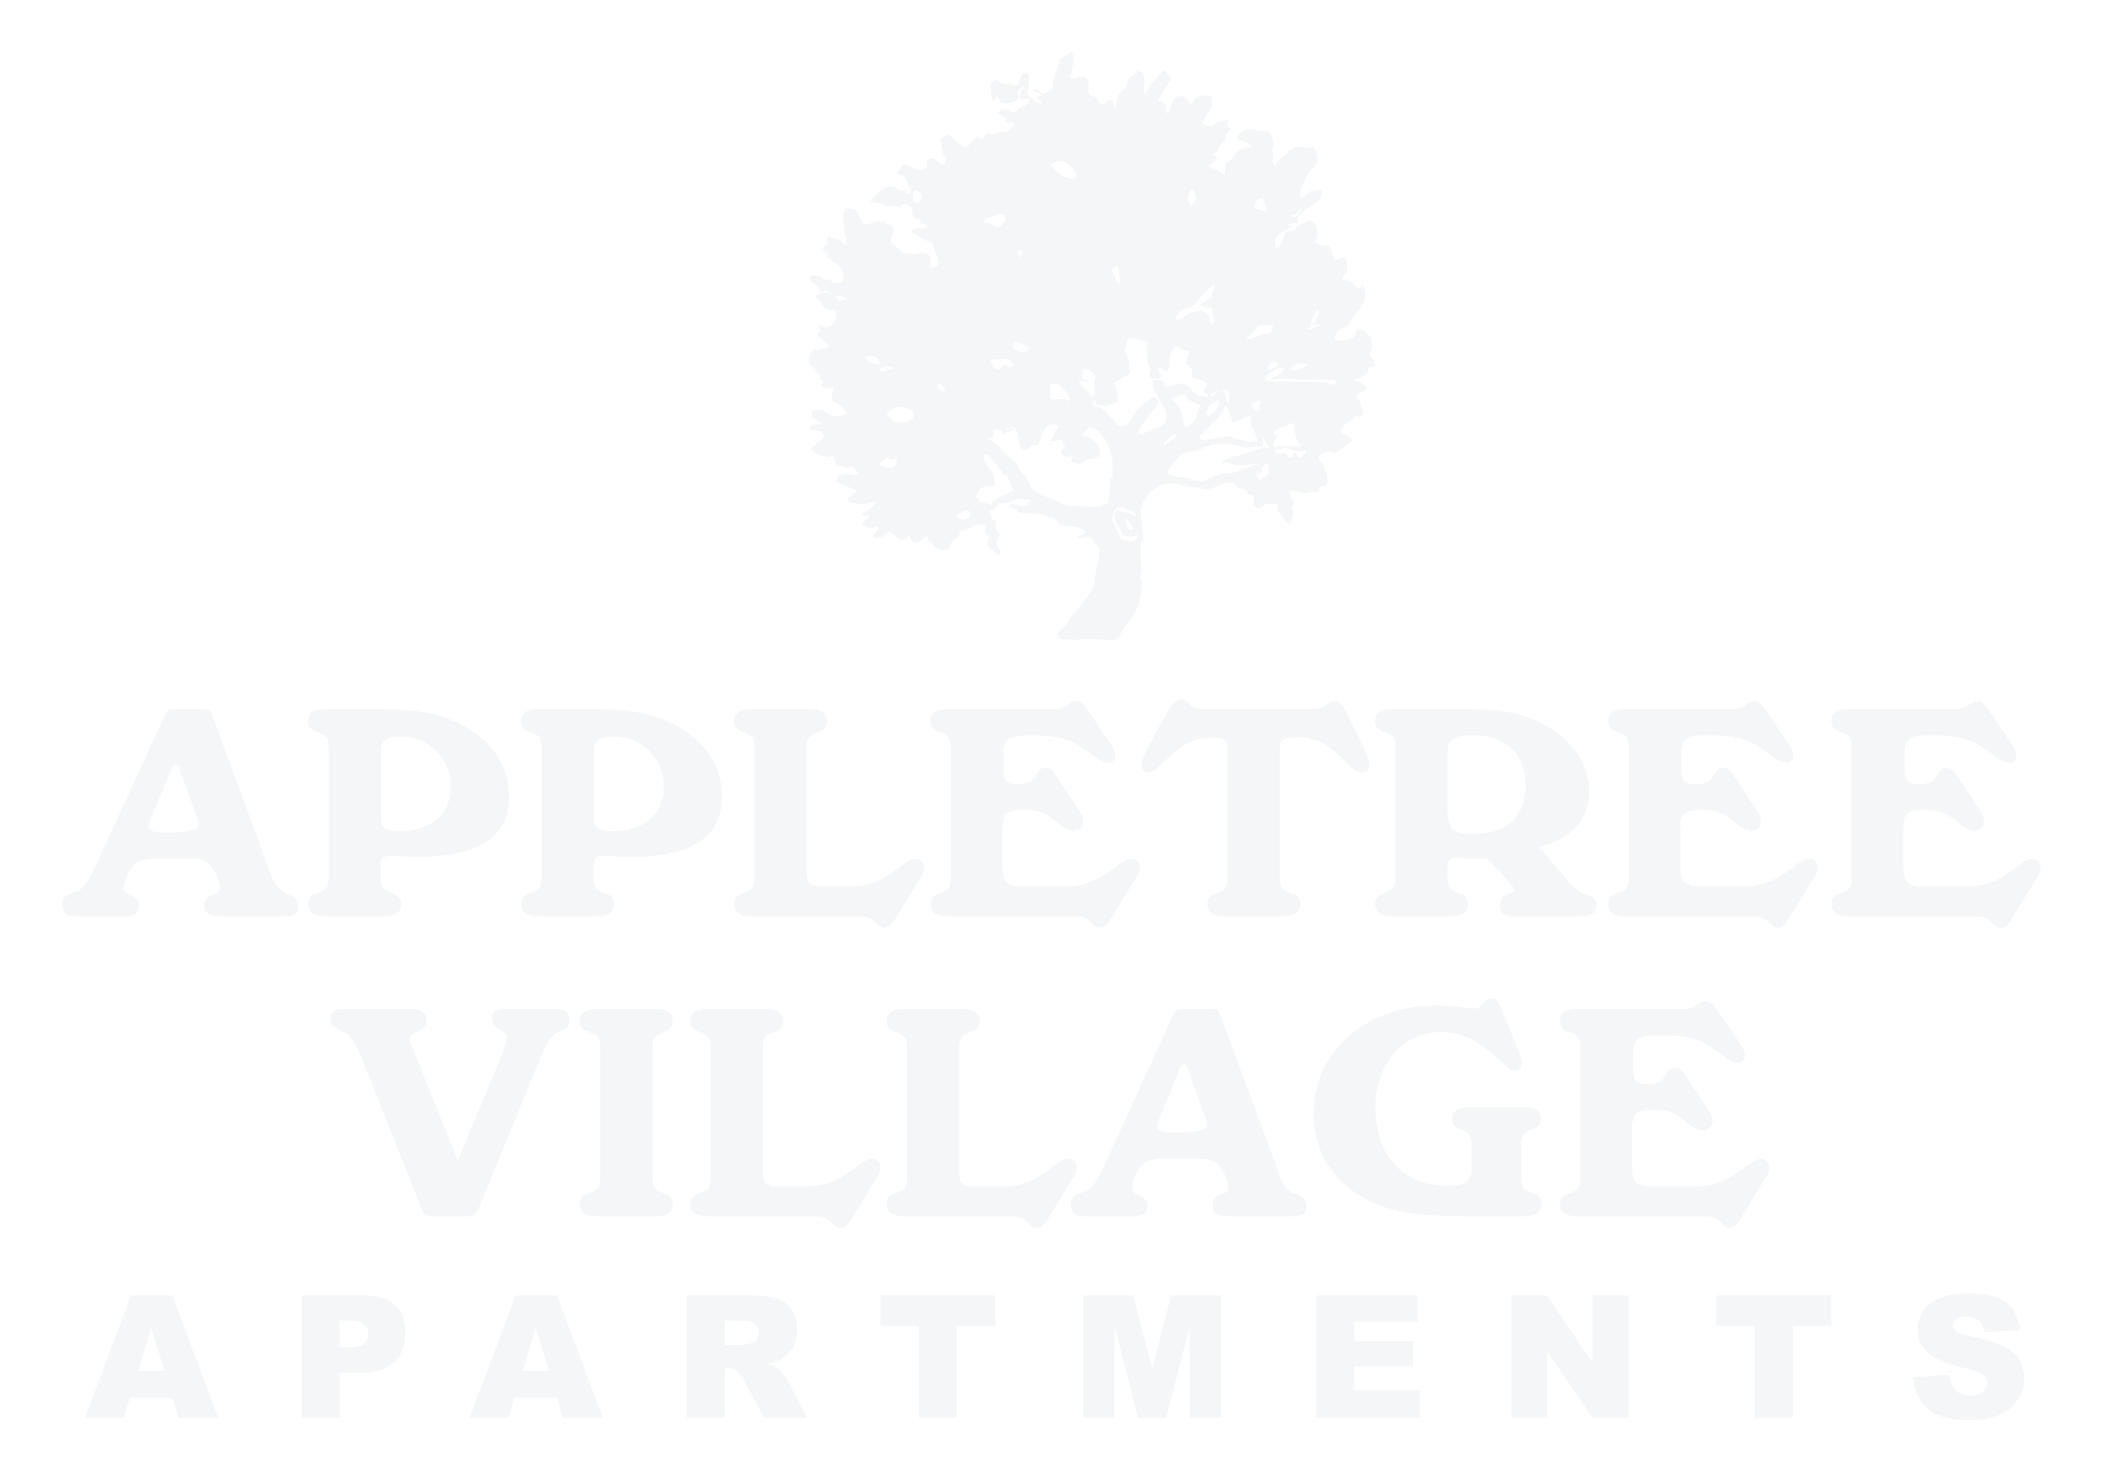 Appletree Village